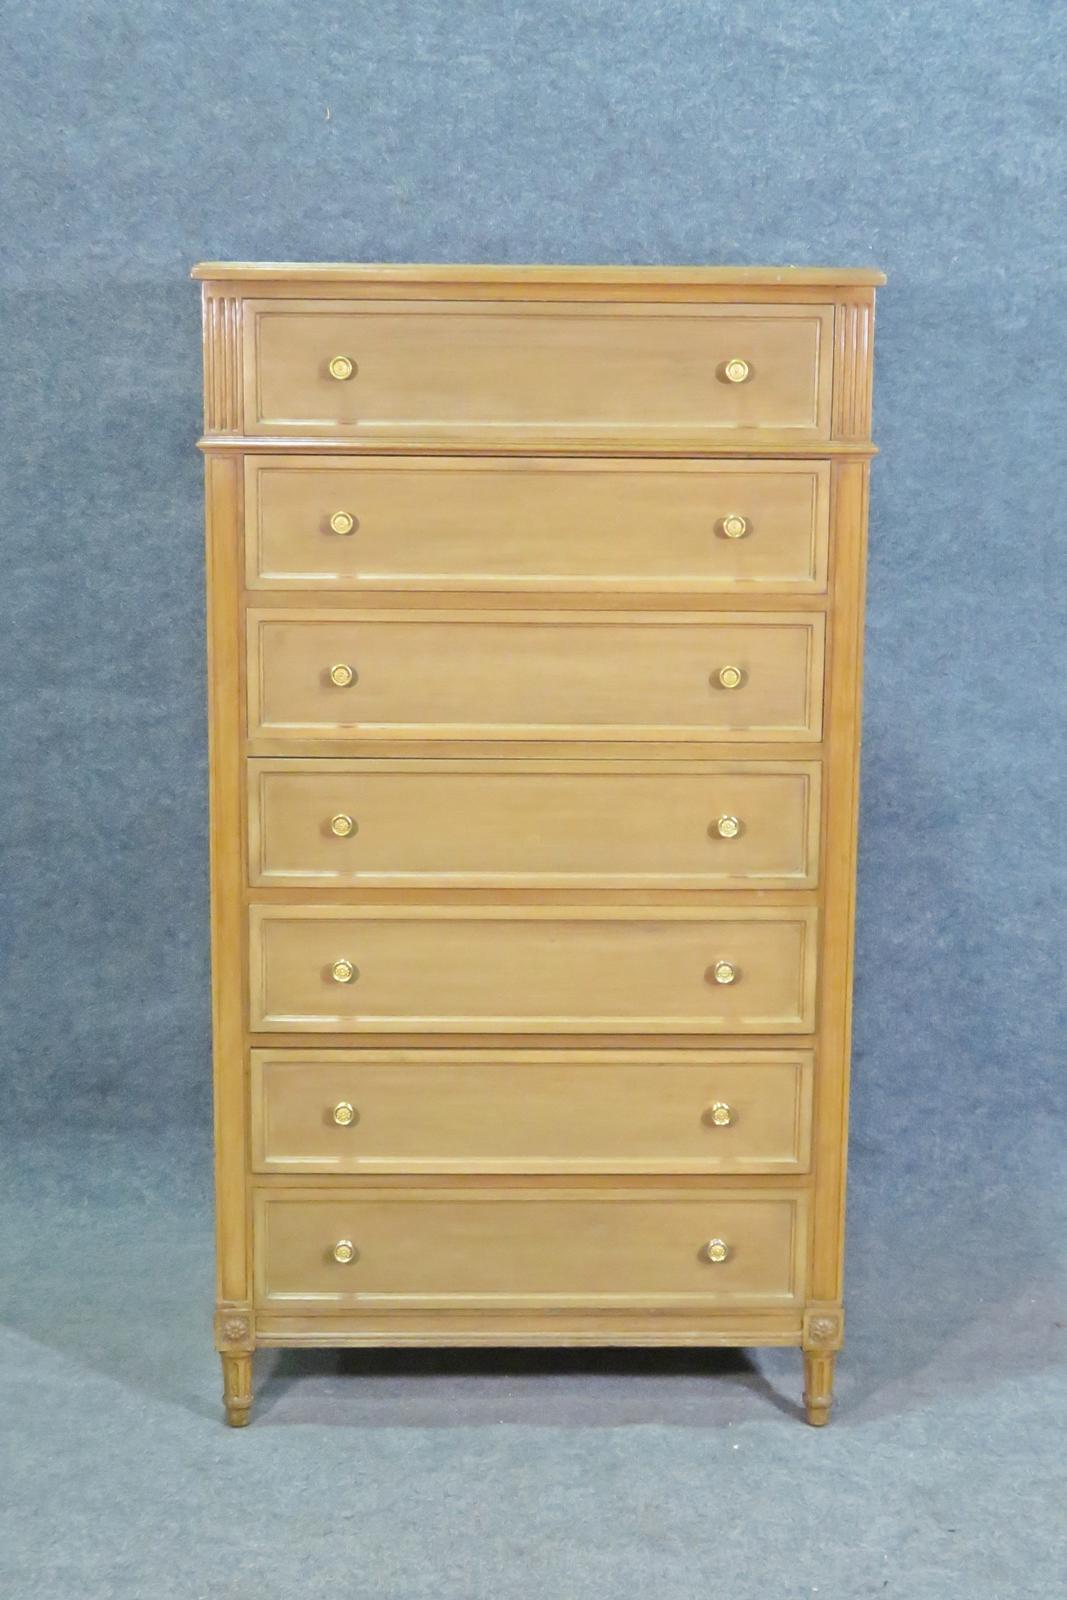 Walnut. Dovetail drawers. 7 drawers. Measures: 54 1/2